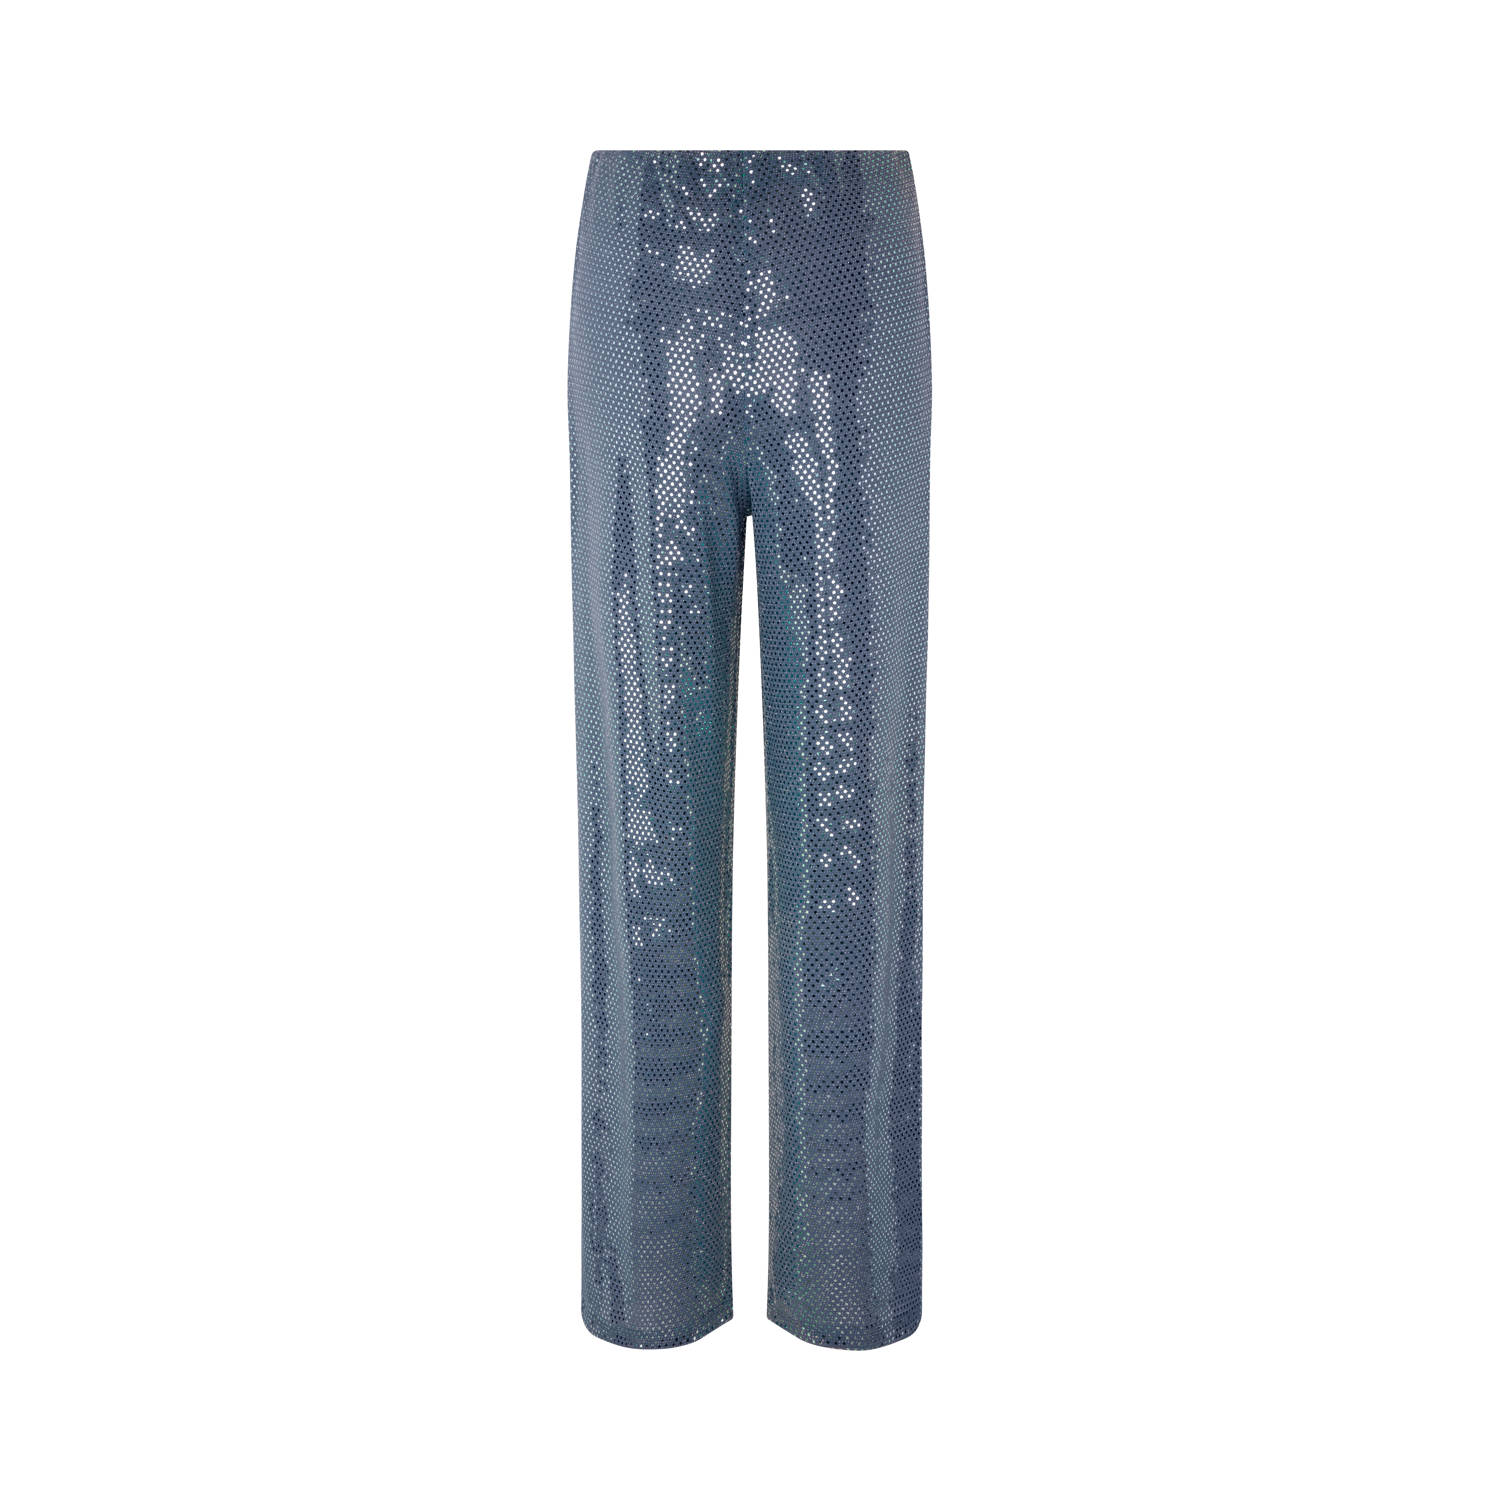 Modström high waist straight fit pantalon met pailletten grijsblauw